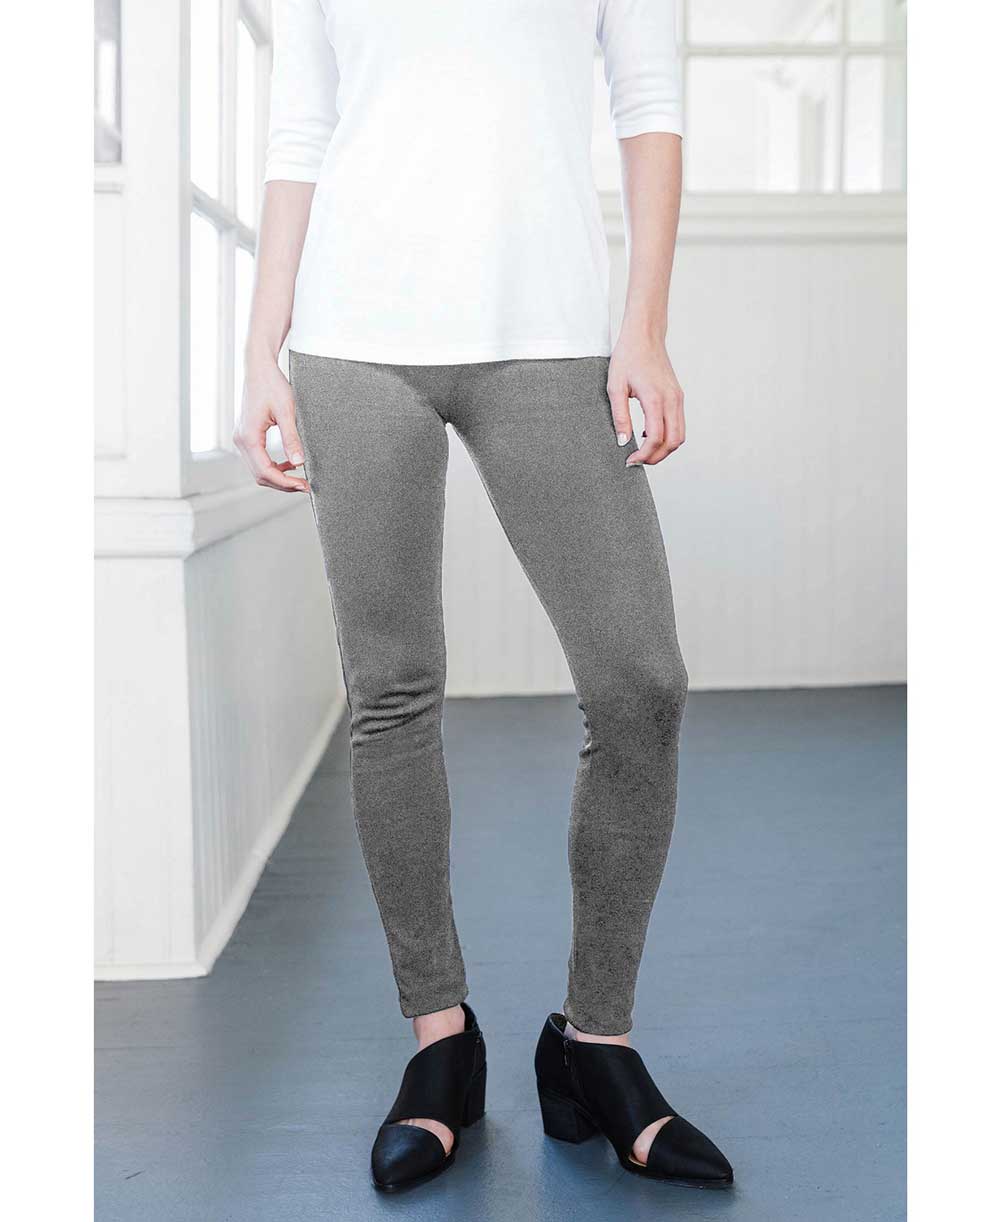 Leggings are the new Jeans. #leggings #organiccotton